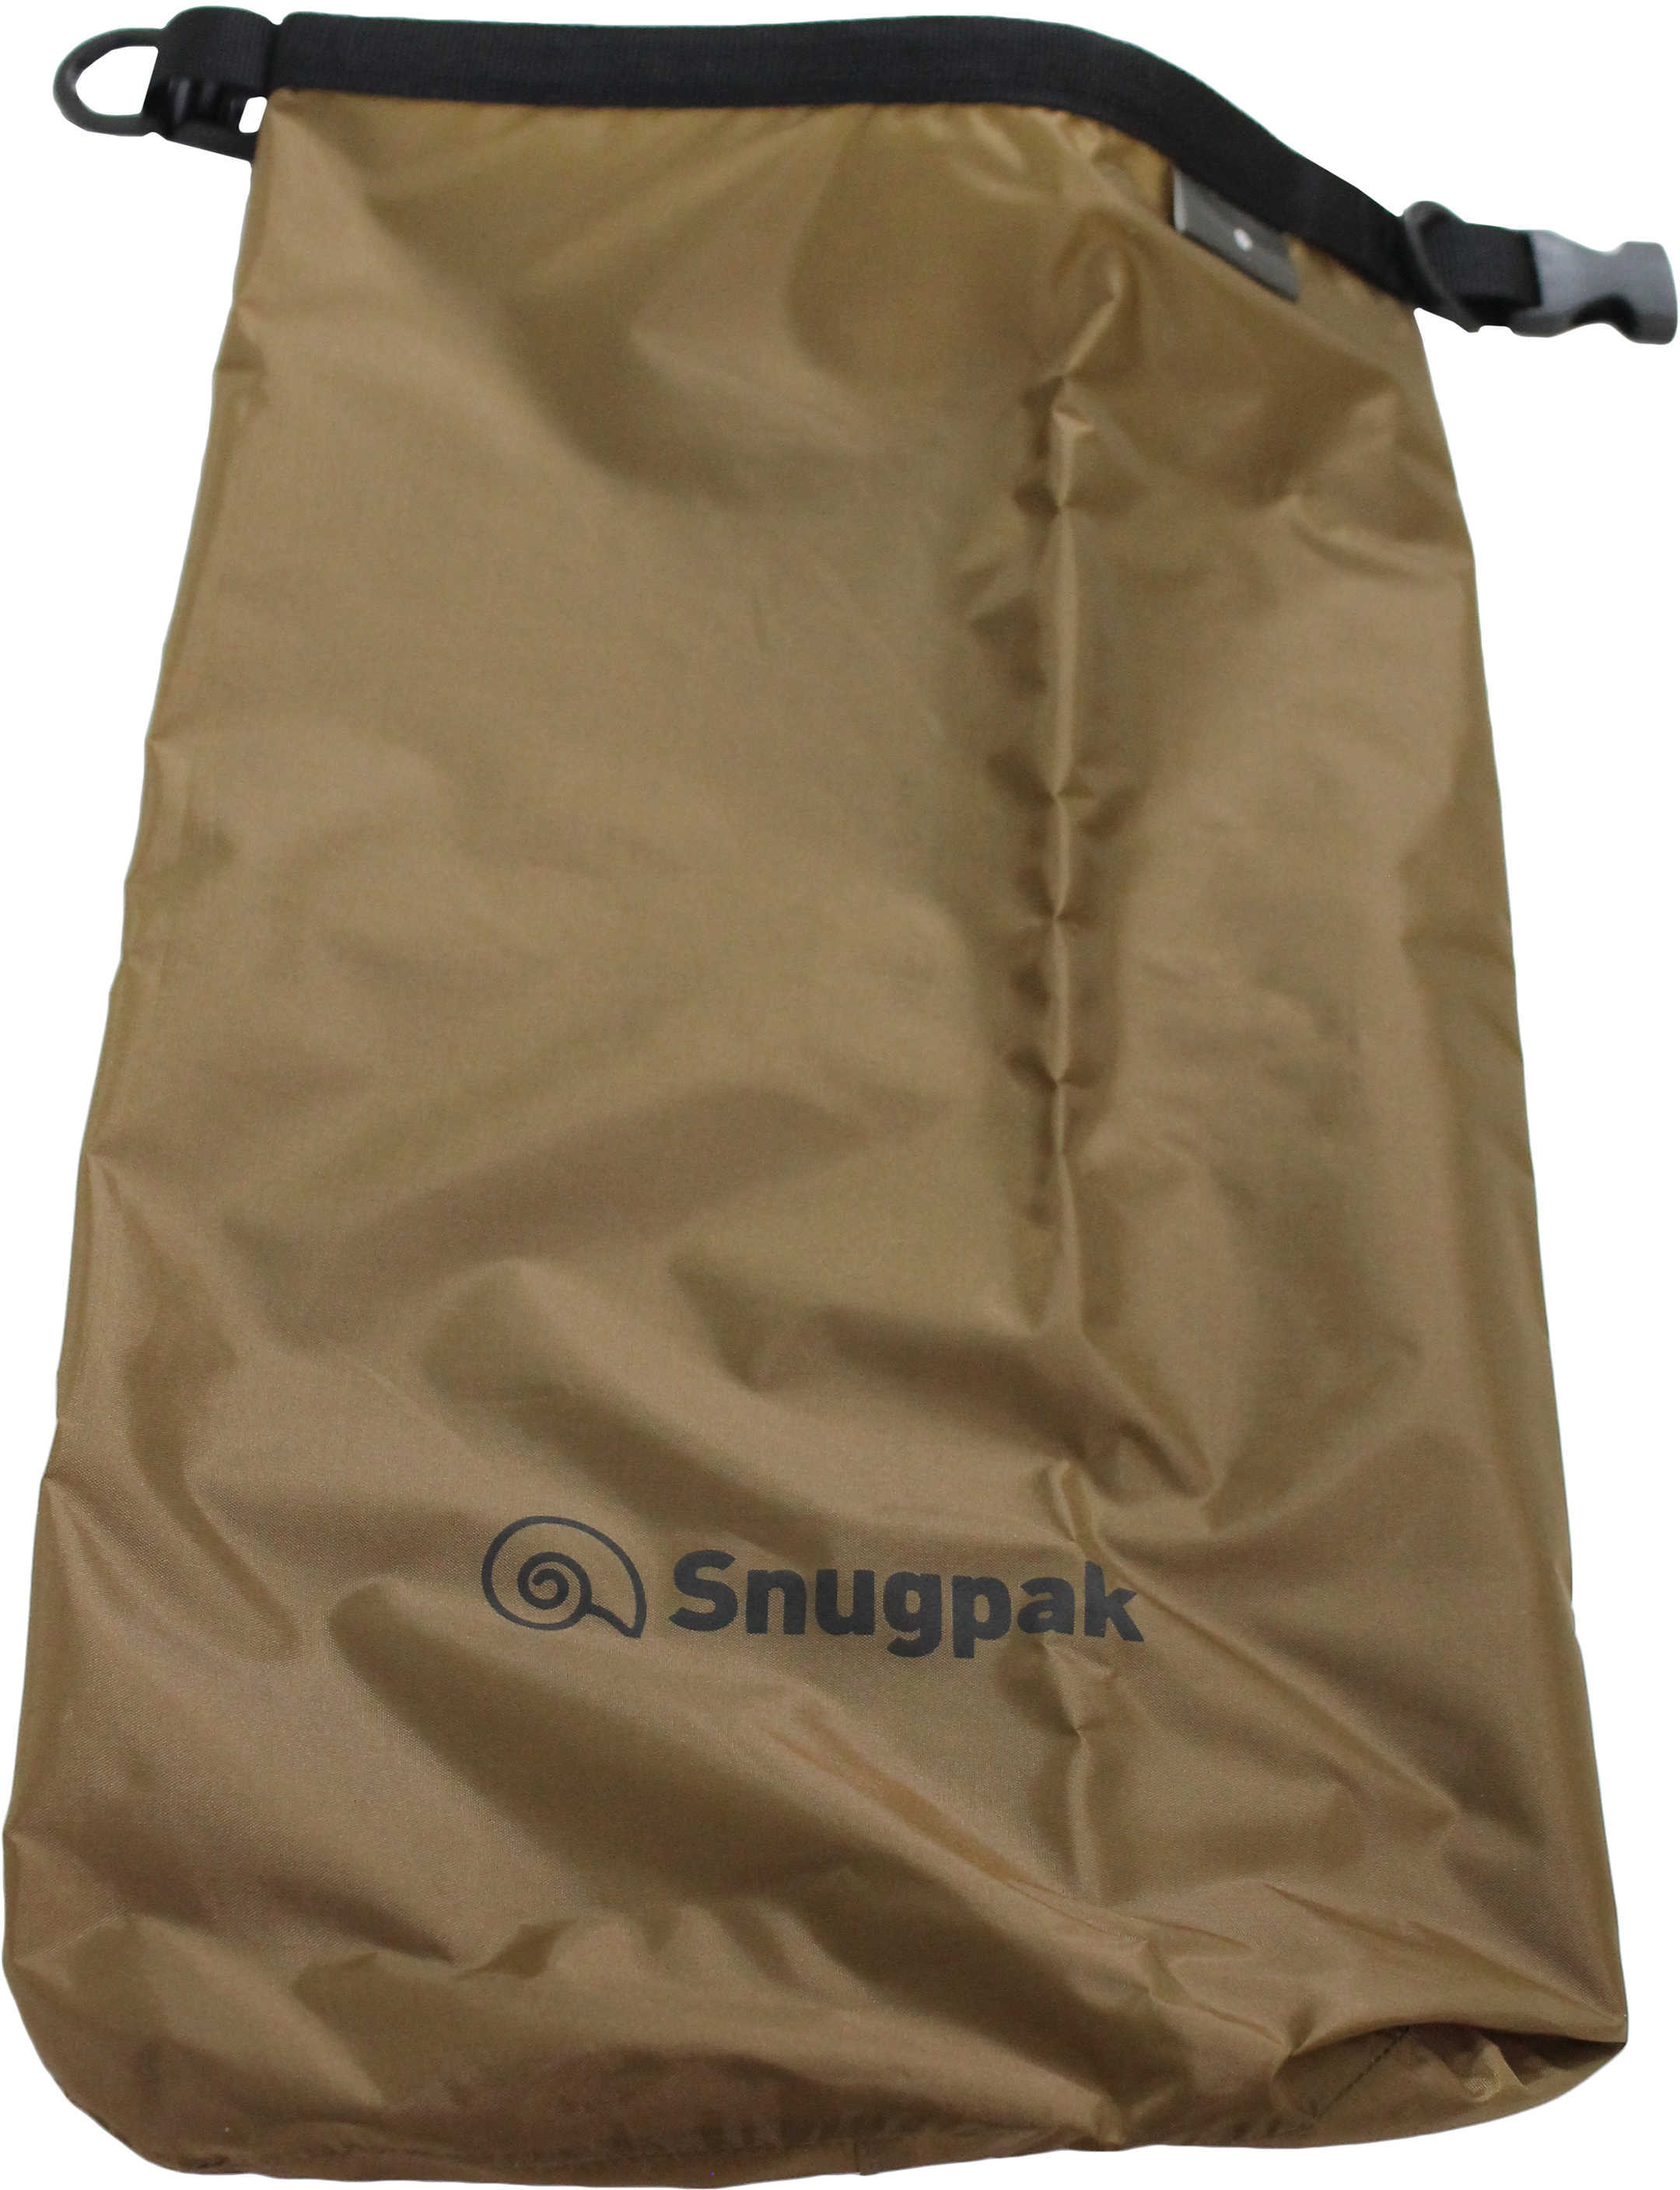 SnugPak DRI-SAK Original Sm Coy Tan